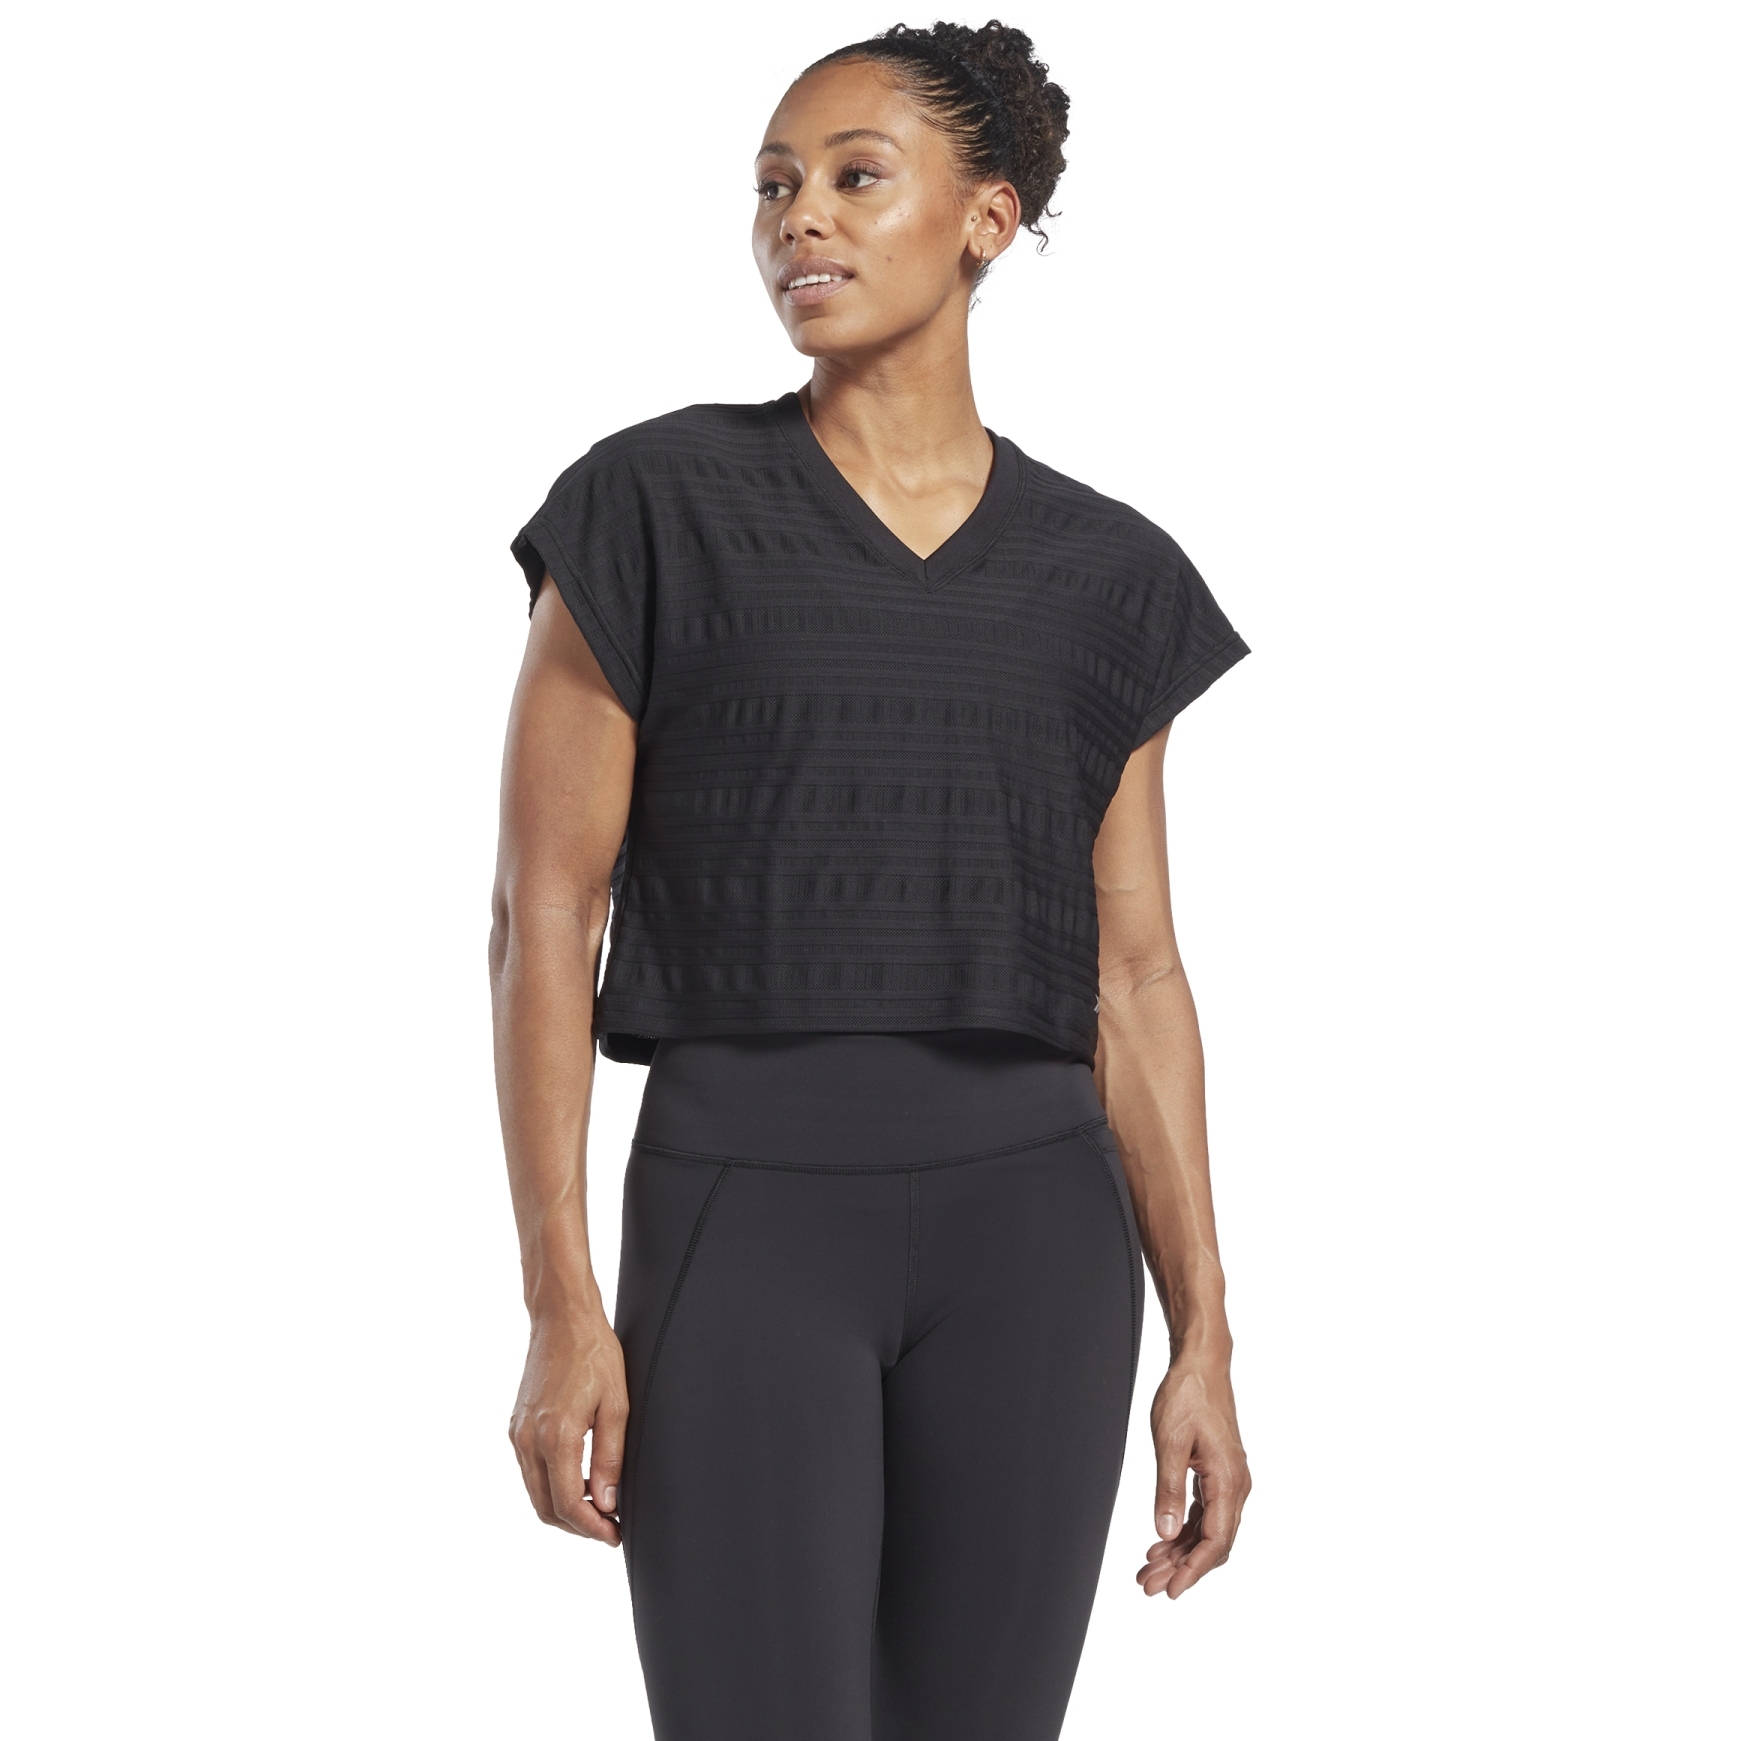 Productfoto van Reebok Perforated T-Shirt Dames - black